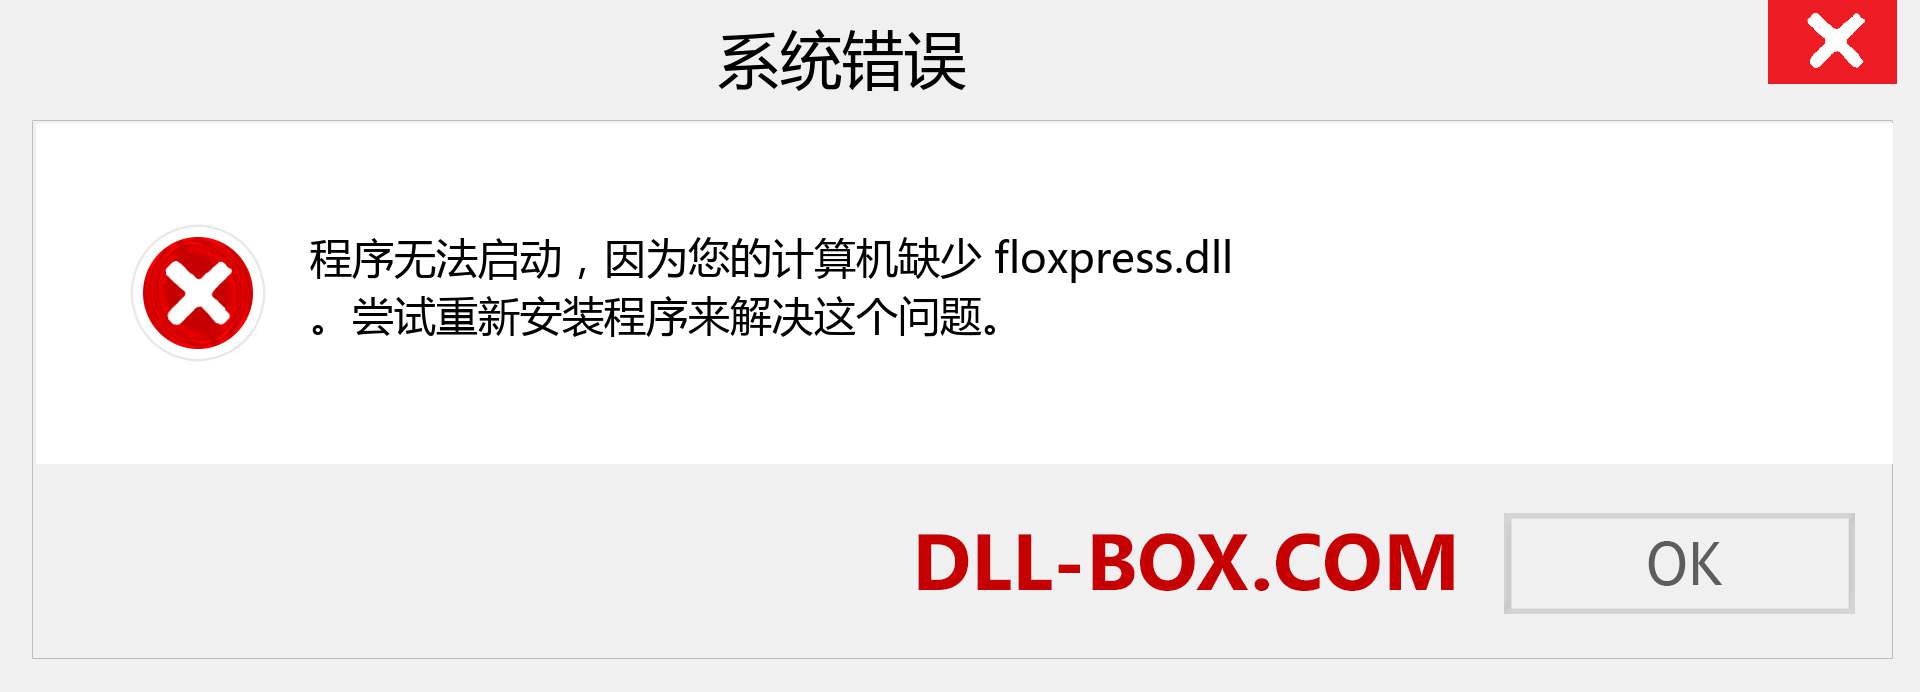 floxpress.dll 文件丢失？。 适用于 Windows 7、8、10 的下载 - 修复 Windows、照片、图像上的 floxpress dll 丢失错误